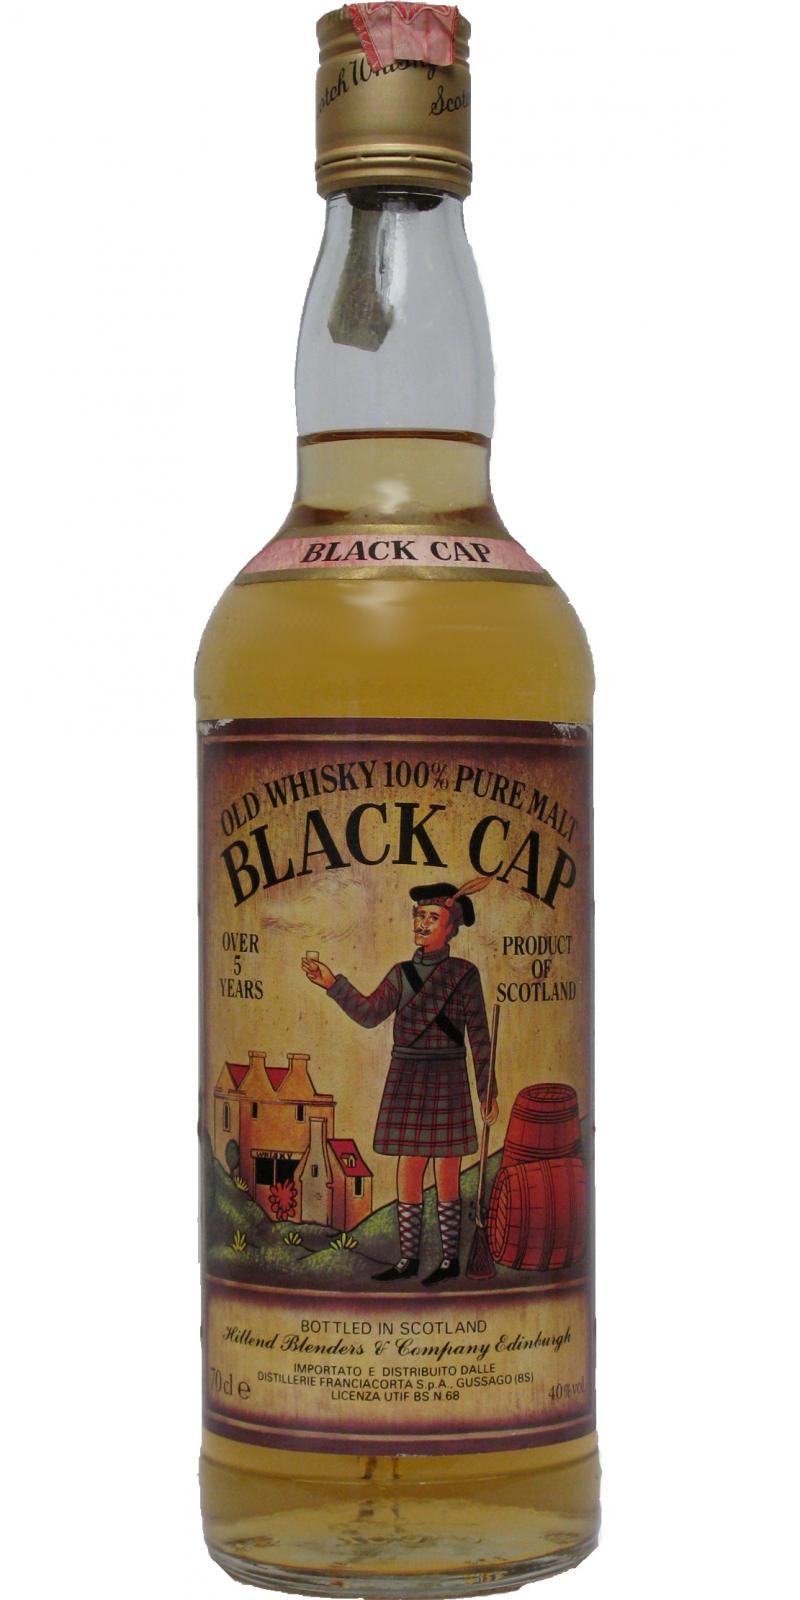 Black Cap 5yo Old Whisky 100% Pure Malt Franciacorta S.p.A 40% 700ml